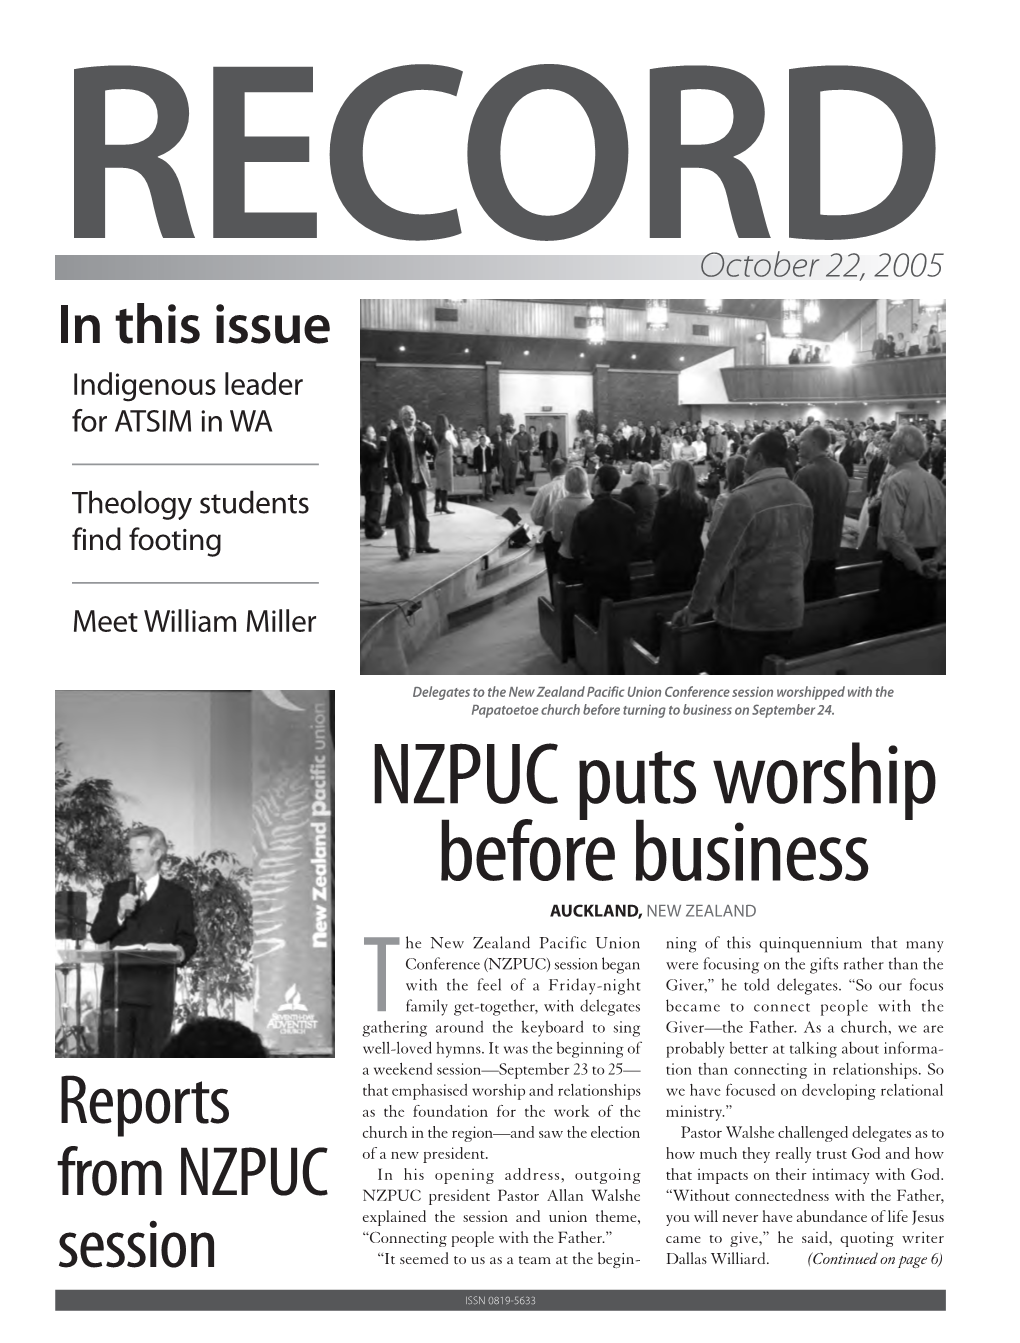 NZPUC Puts Worship Before Business